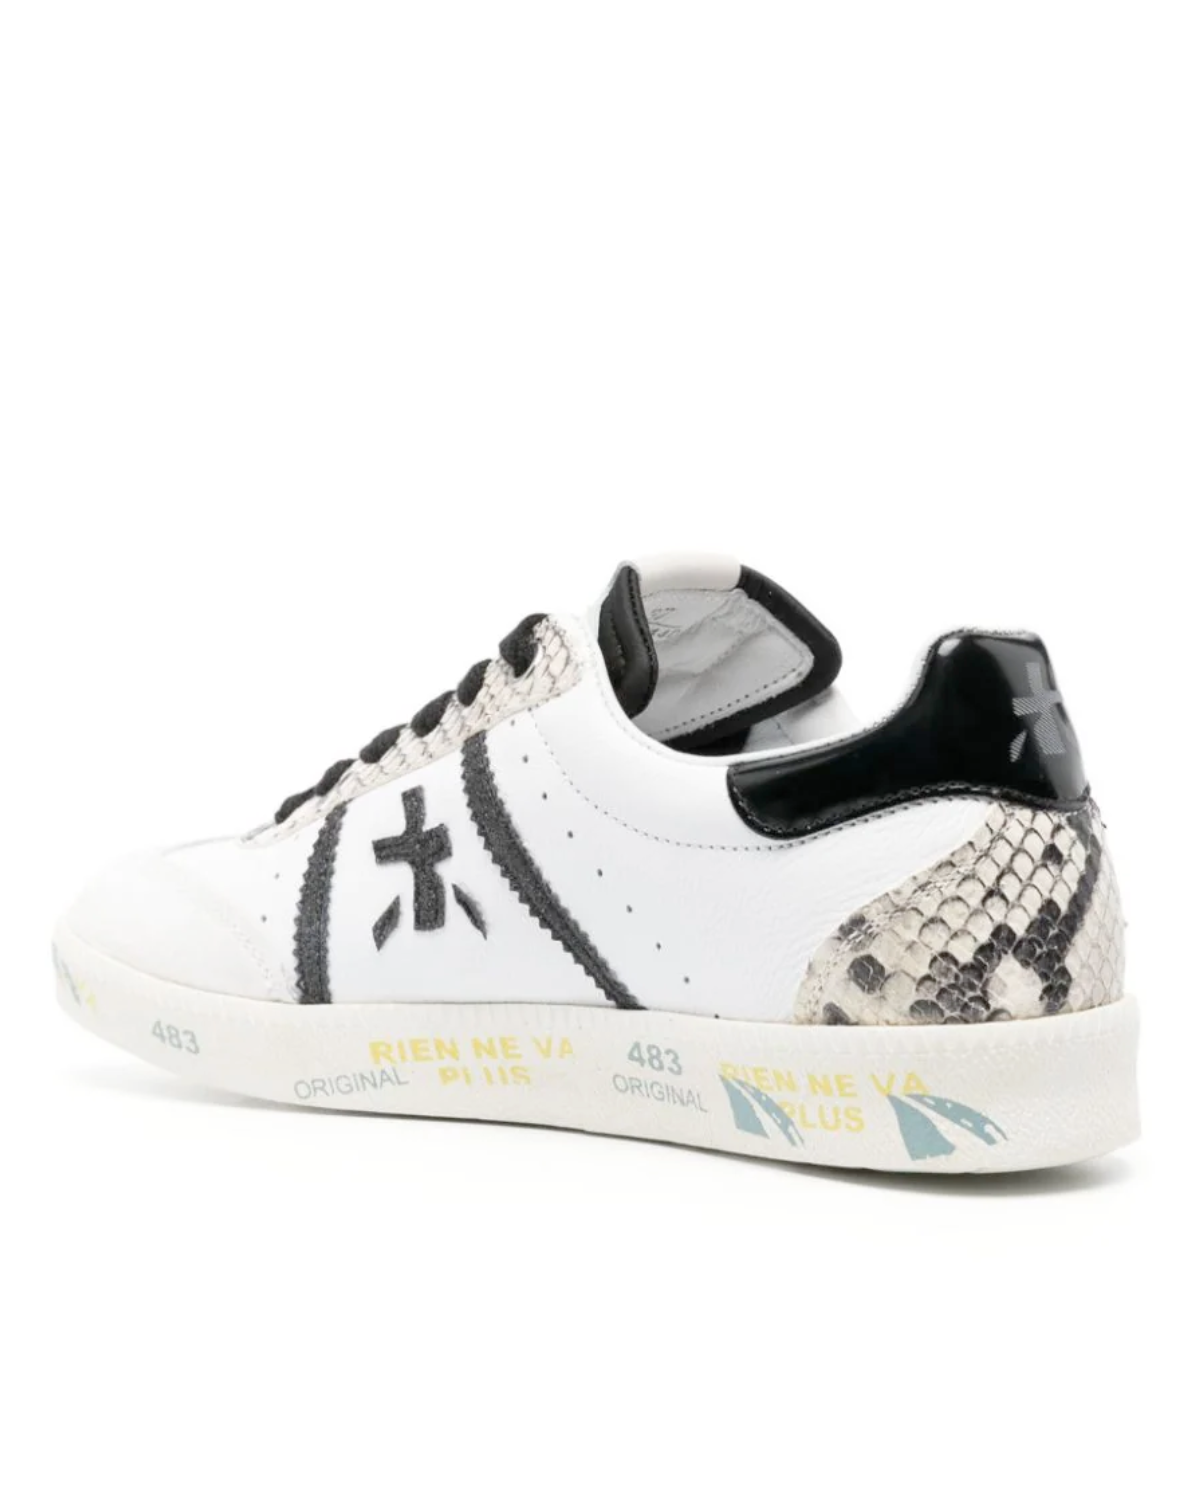 Bonnie Sneaker 6544 (Black/White/Snakeskin)